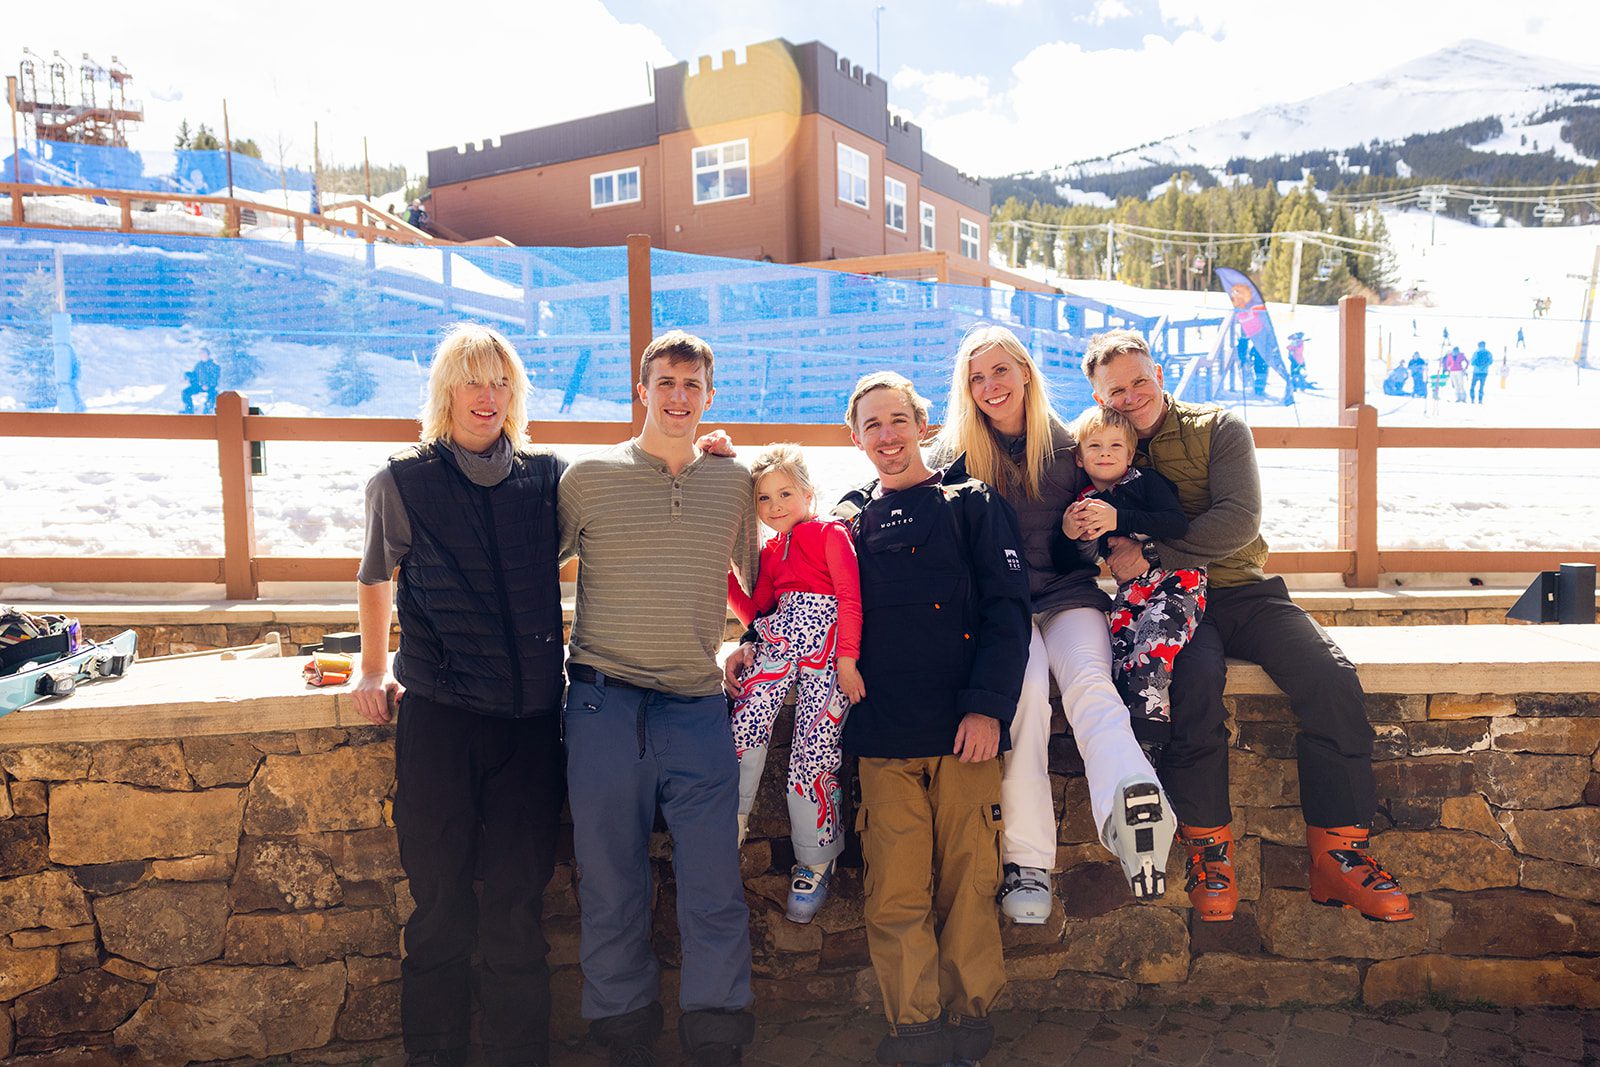 Group family photo at Breckenridge ski resort after parents vow renewal.